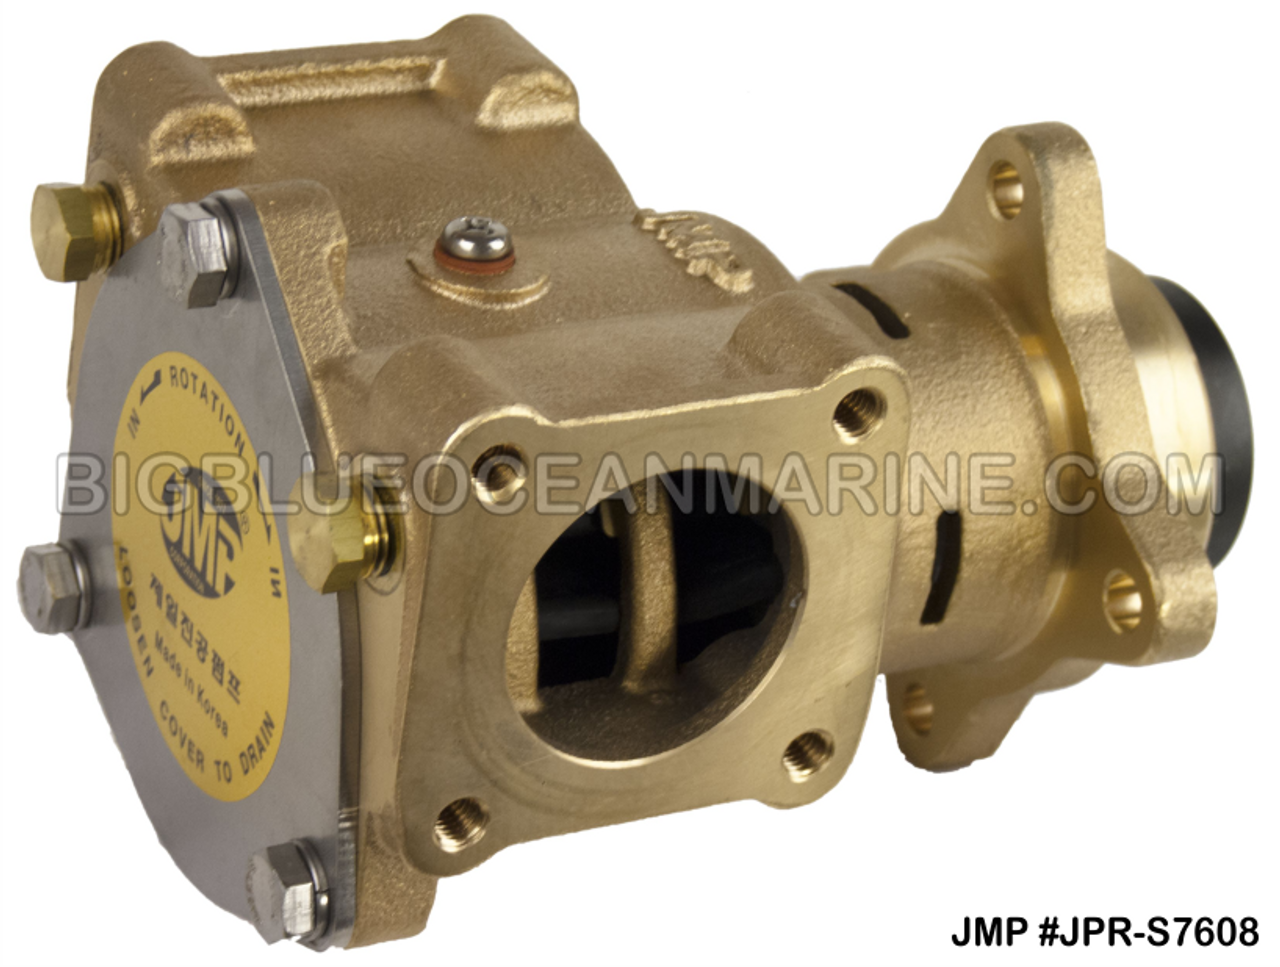 JMP Marine Cummins Replacement Engine Cooling Seawater Pump #JPR-S7608
Cummins 5268375, 4948142, 3974455, Sherwood P2701X, P2701-01, P2702-01, P2706-01, P2708X, P2710-01